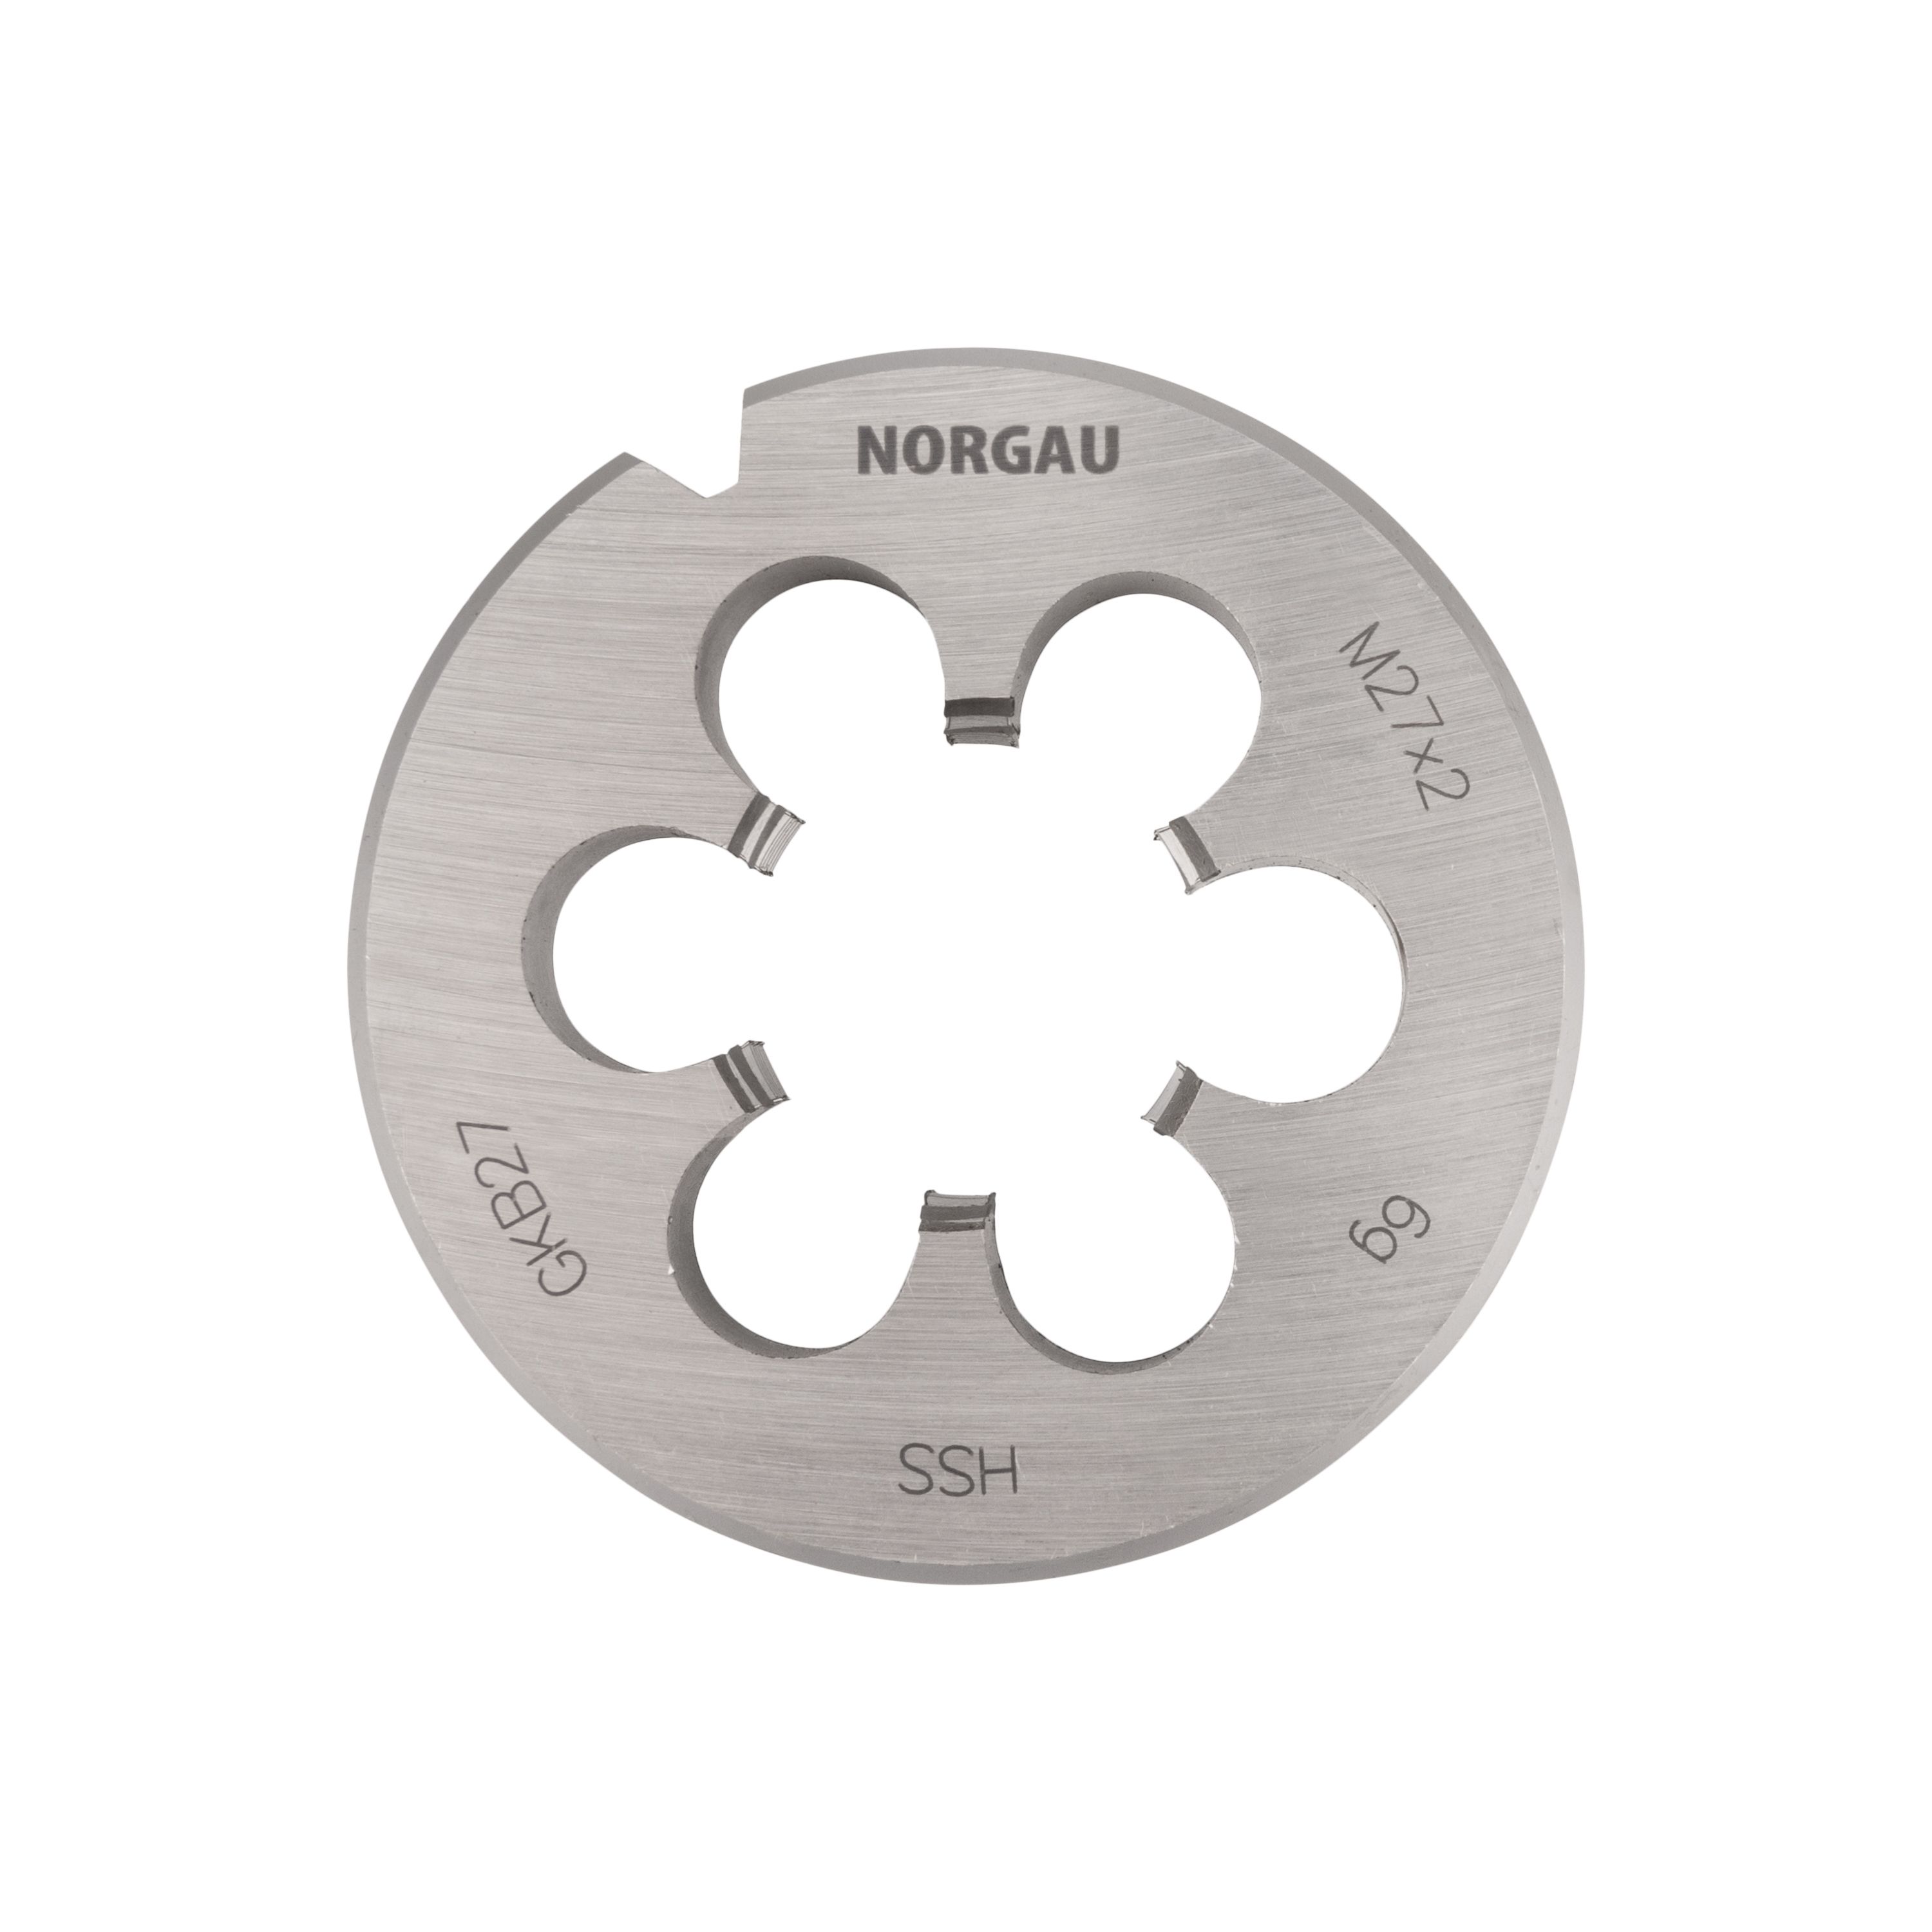 Плашка NORGAU Industrial MF27x2х65 мм. метрическая, угол 60, по DIN223, HSS плашка м12х1 75 мм norgau industrial метрическая угол 60° по din223 hss